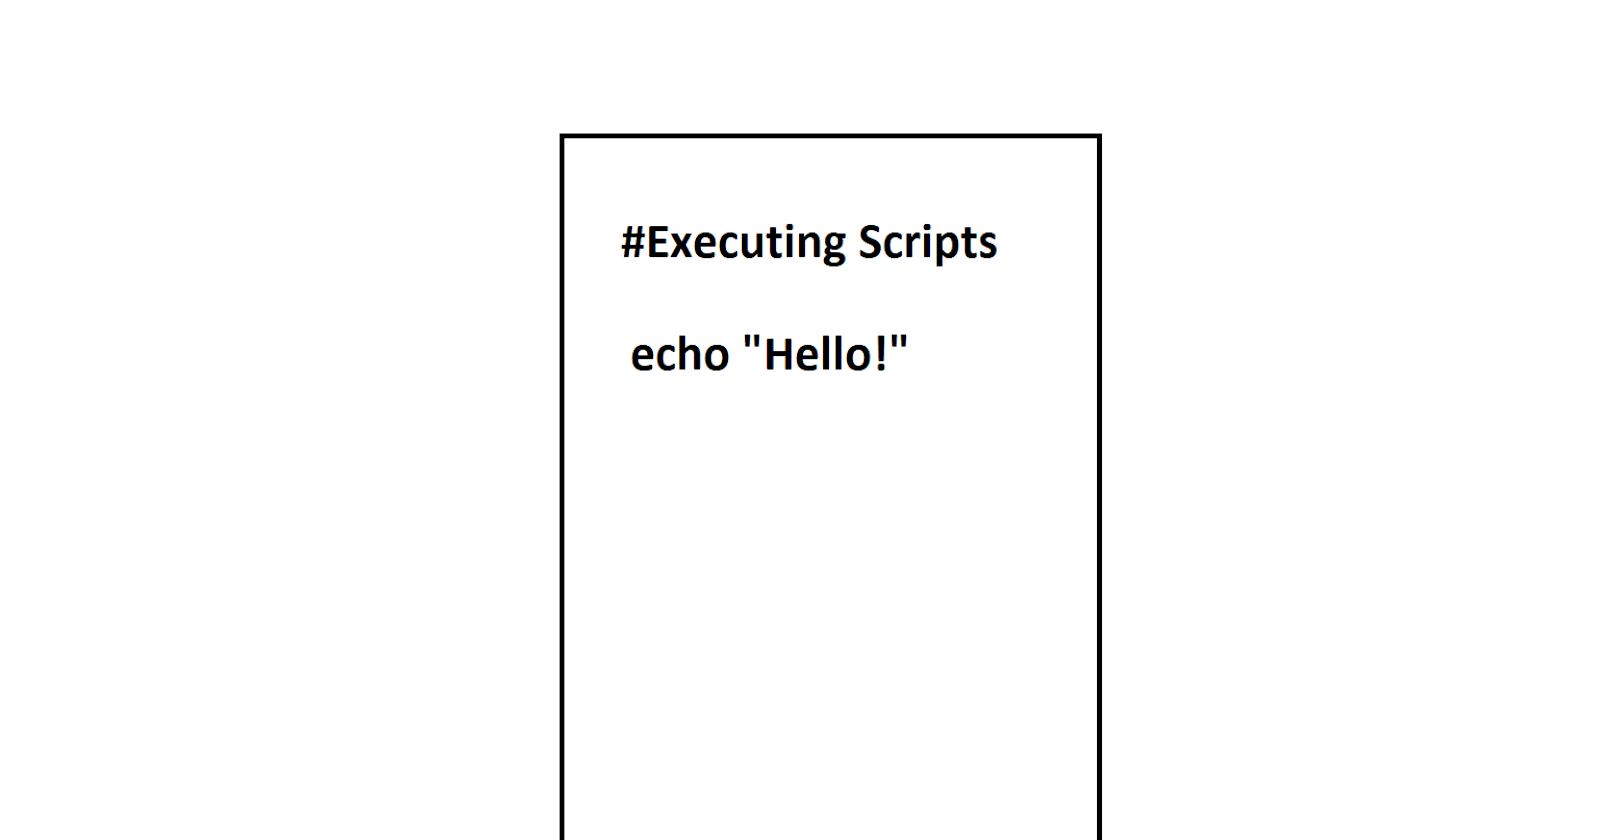 How to Execute .sh Files